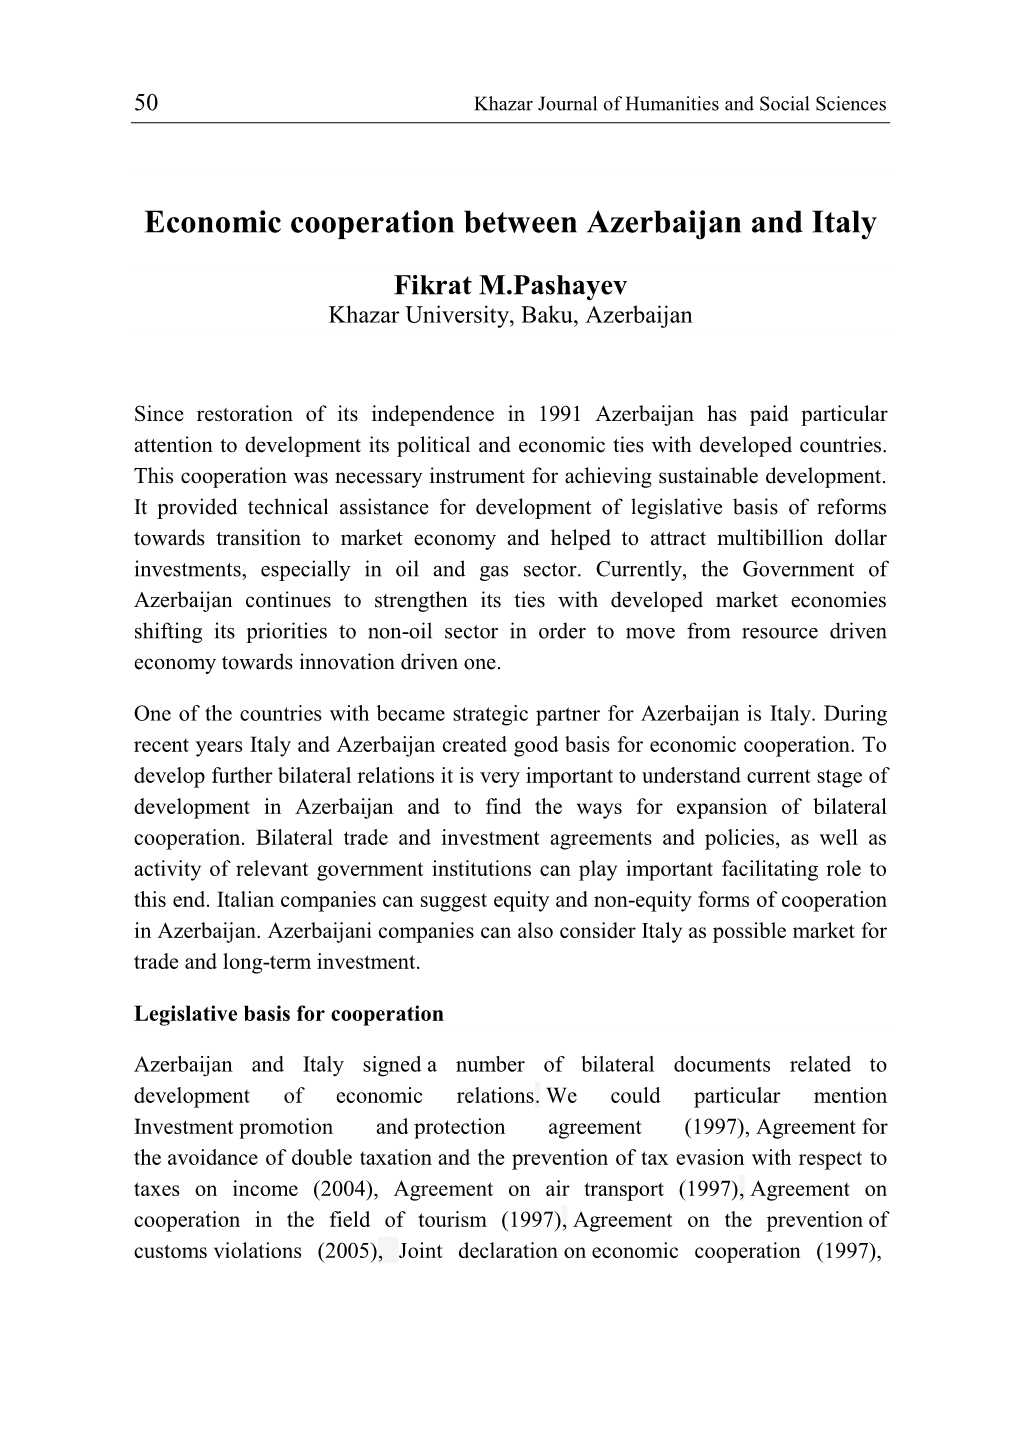 Economic Cooperation Between Azerbaijan and Italy